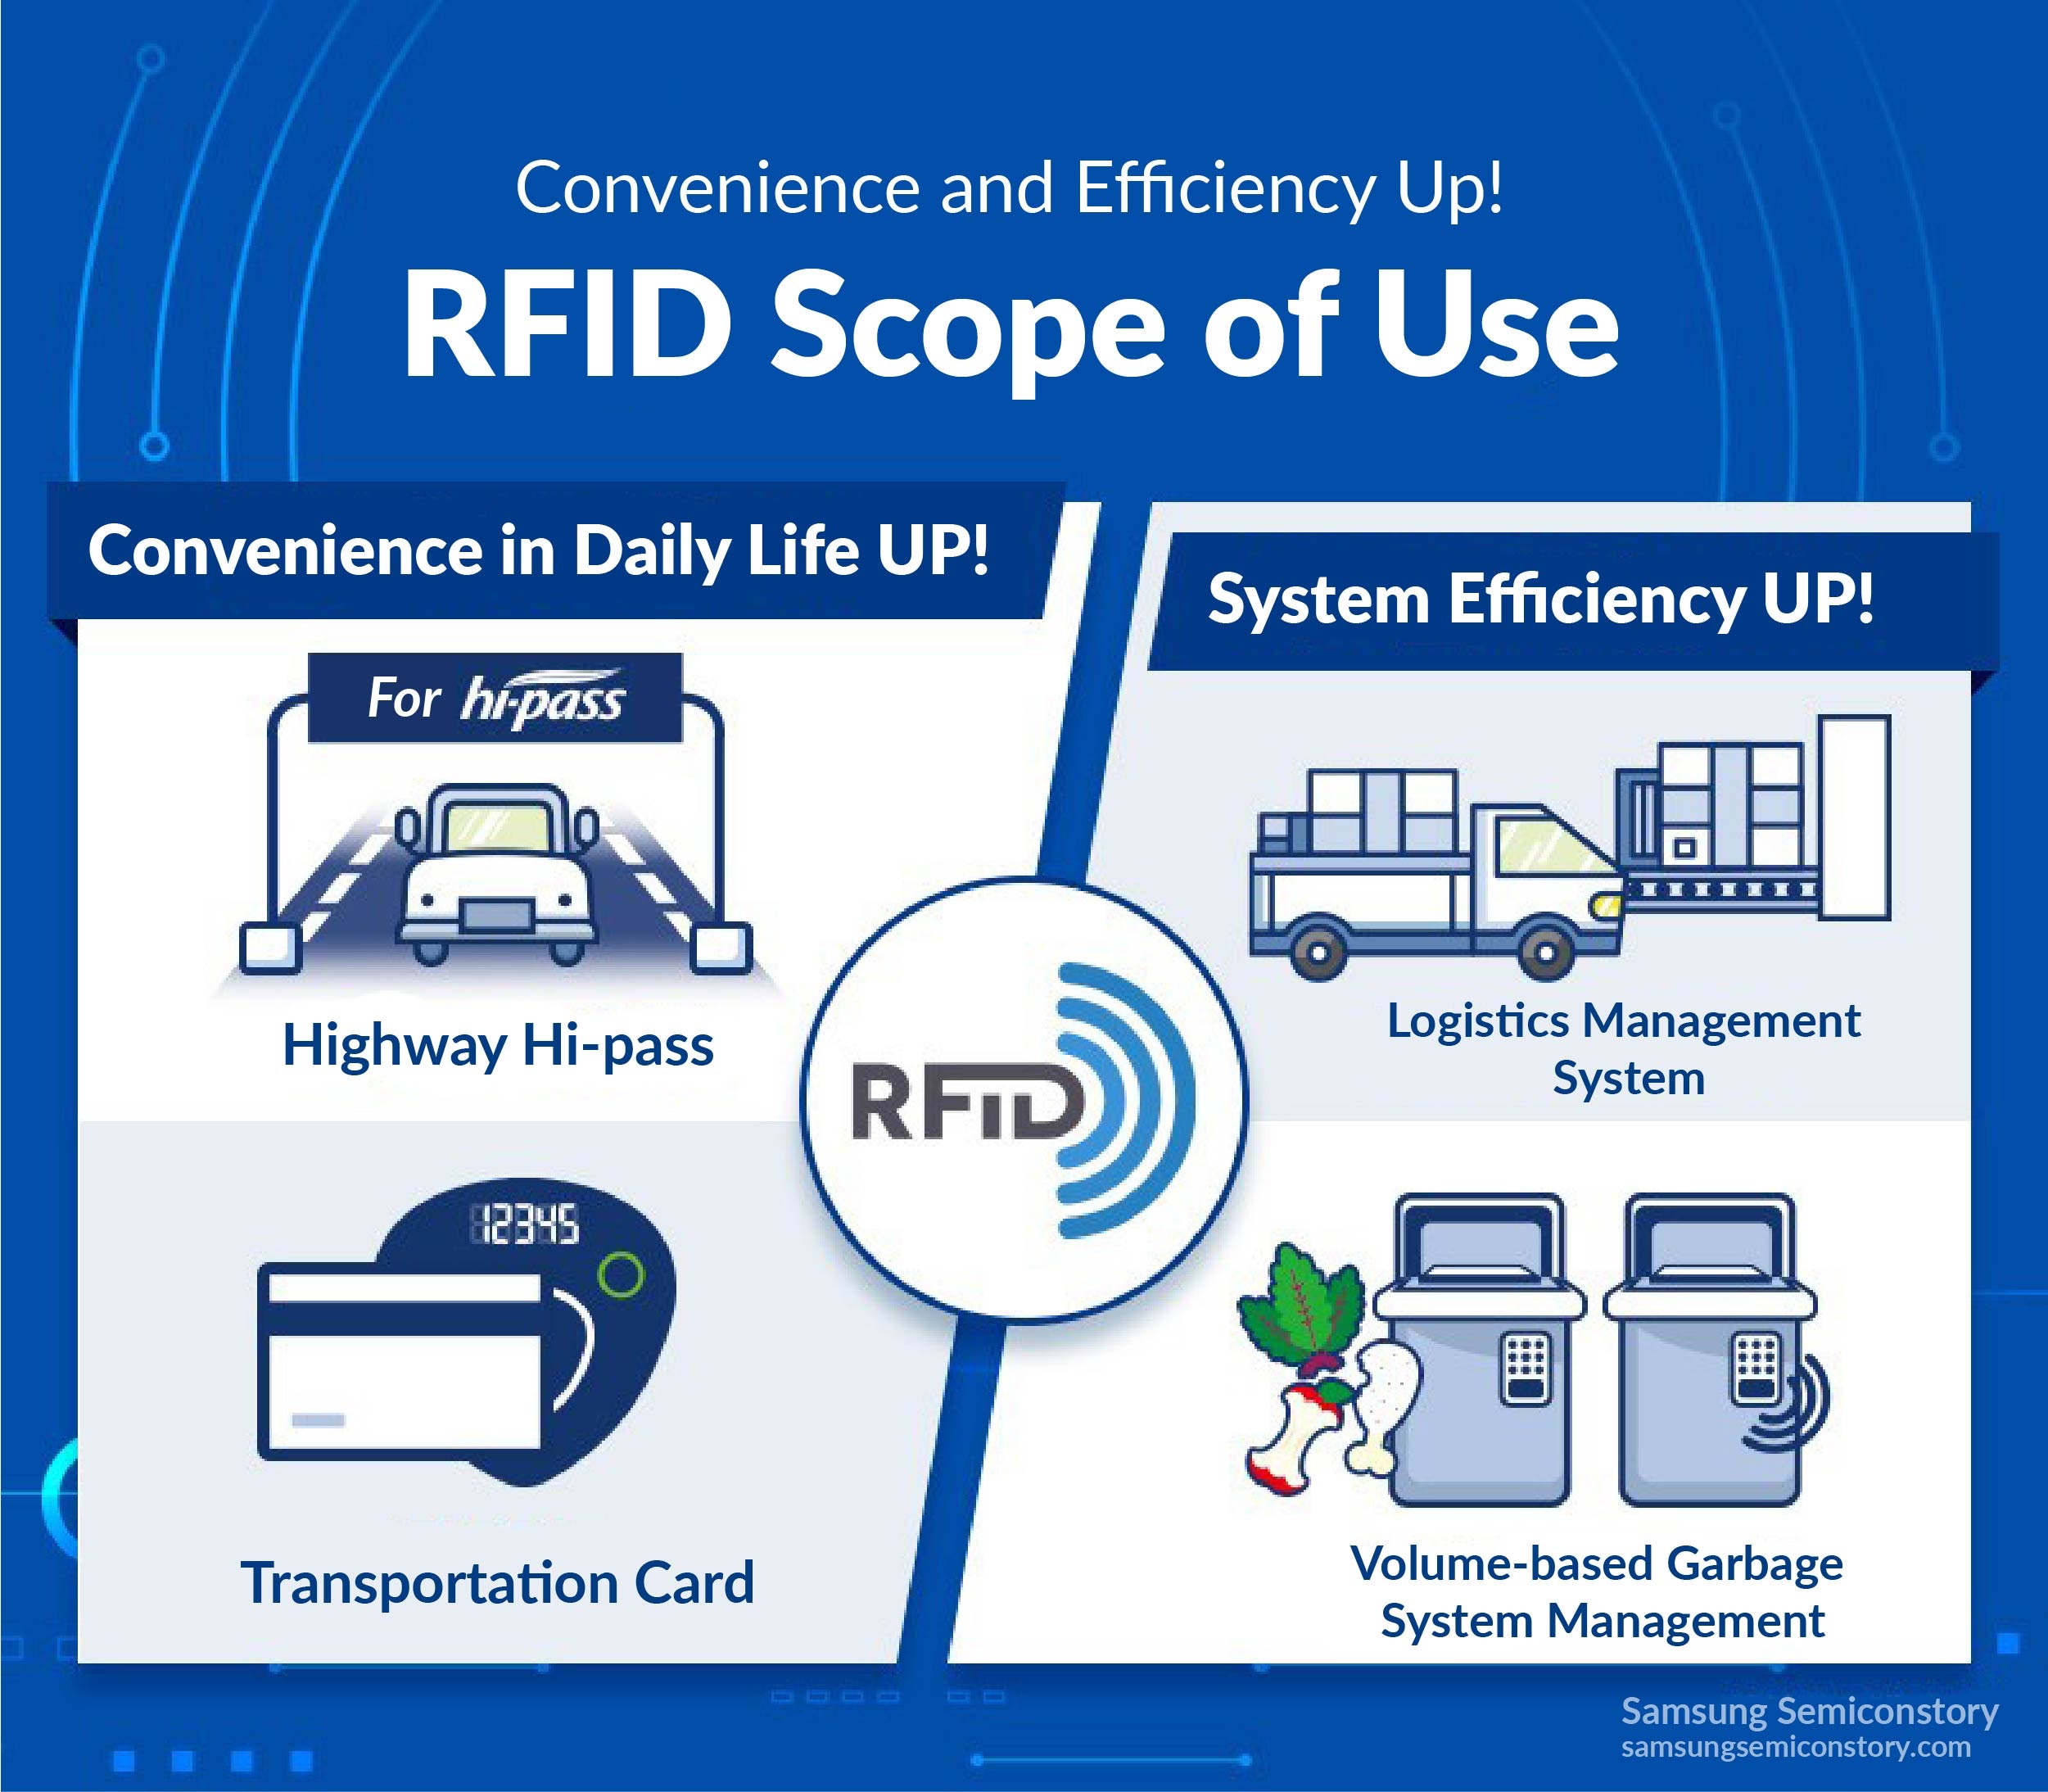 RFID 활용 범위